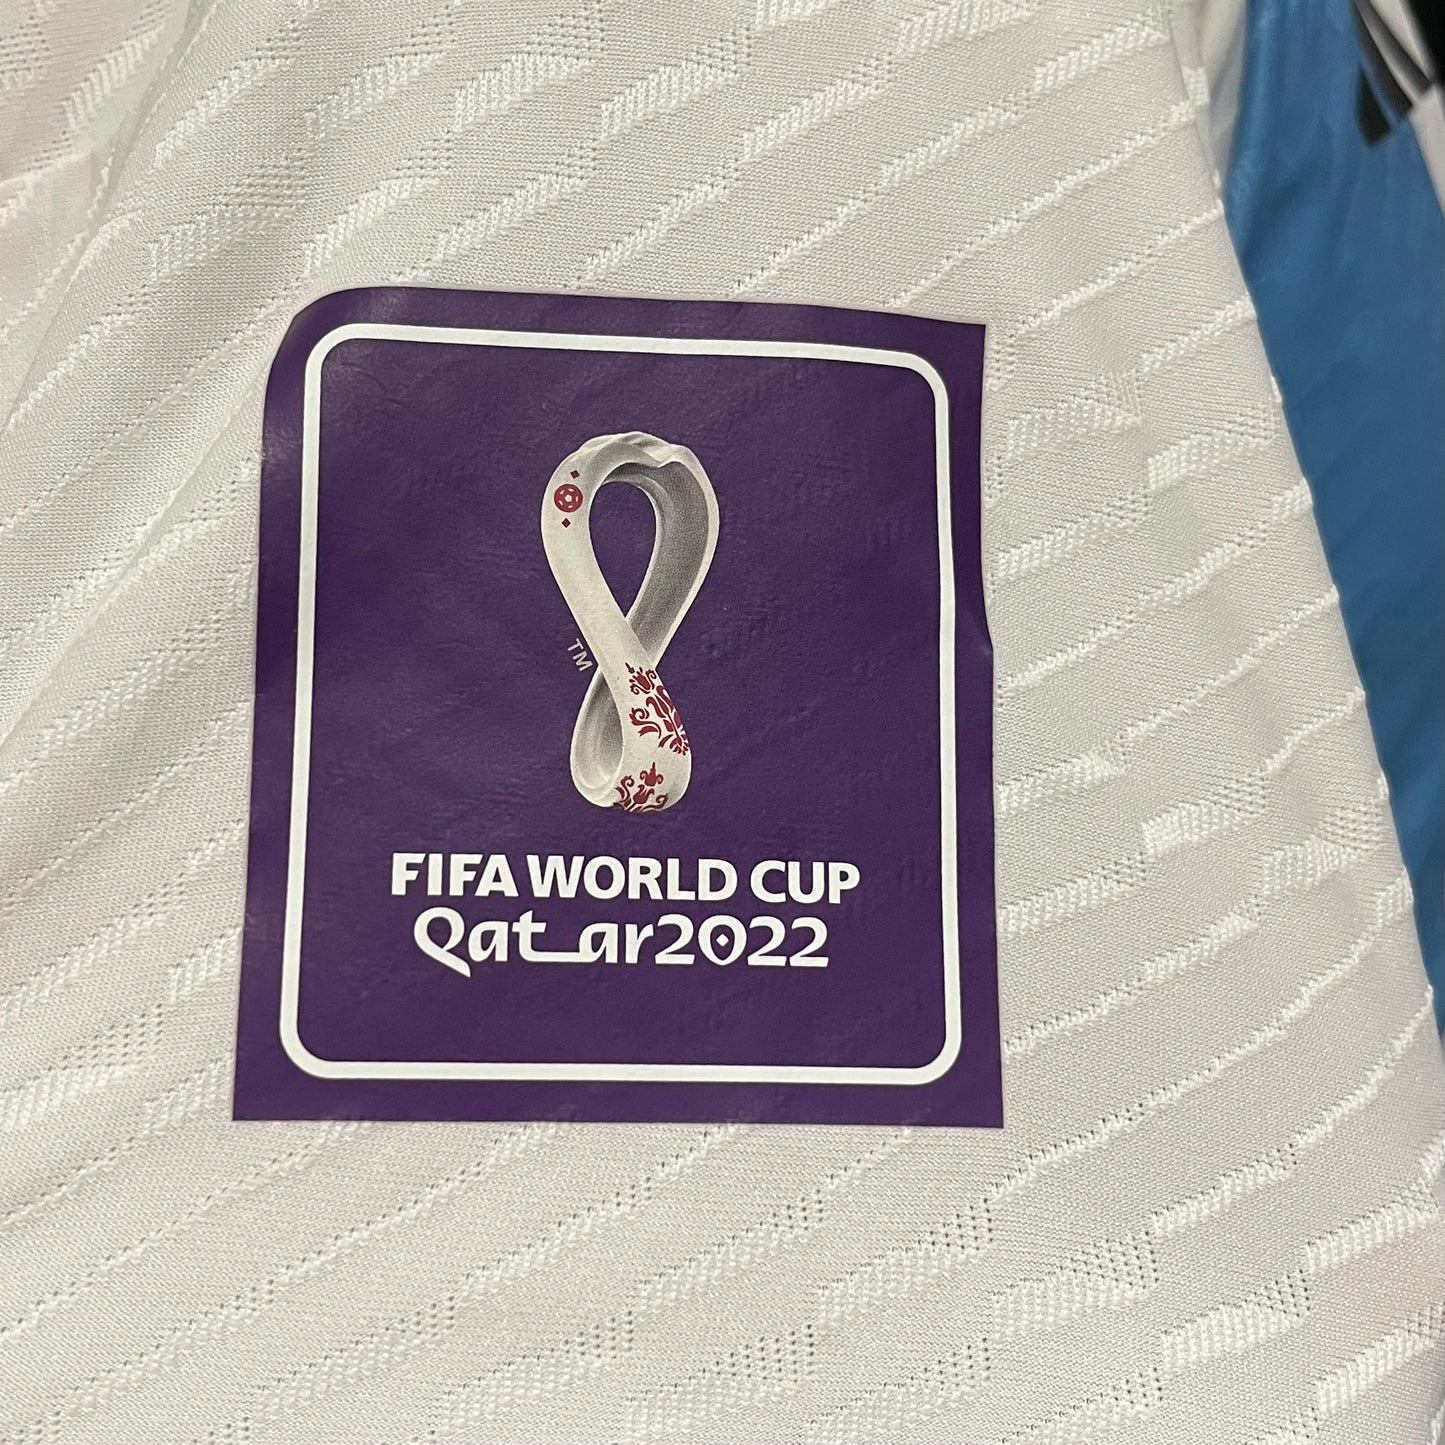 Lionel Messi partido emitido Adidas Heat. RDY camiseta Argentina vs Arabia Saudita 2022 FIFA World Cup